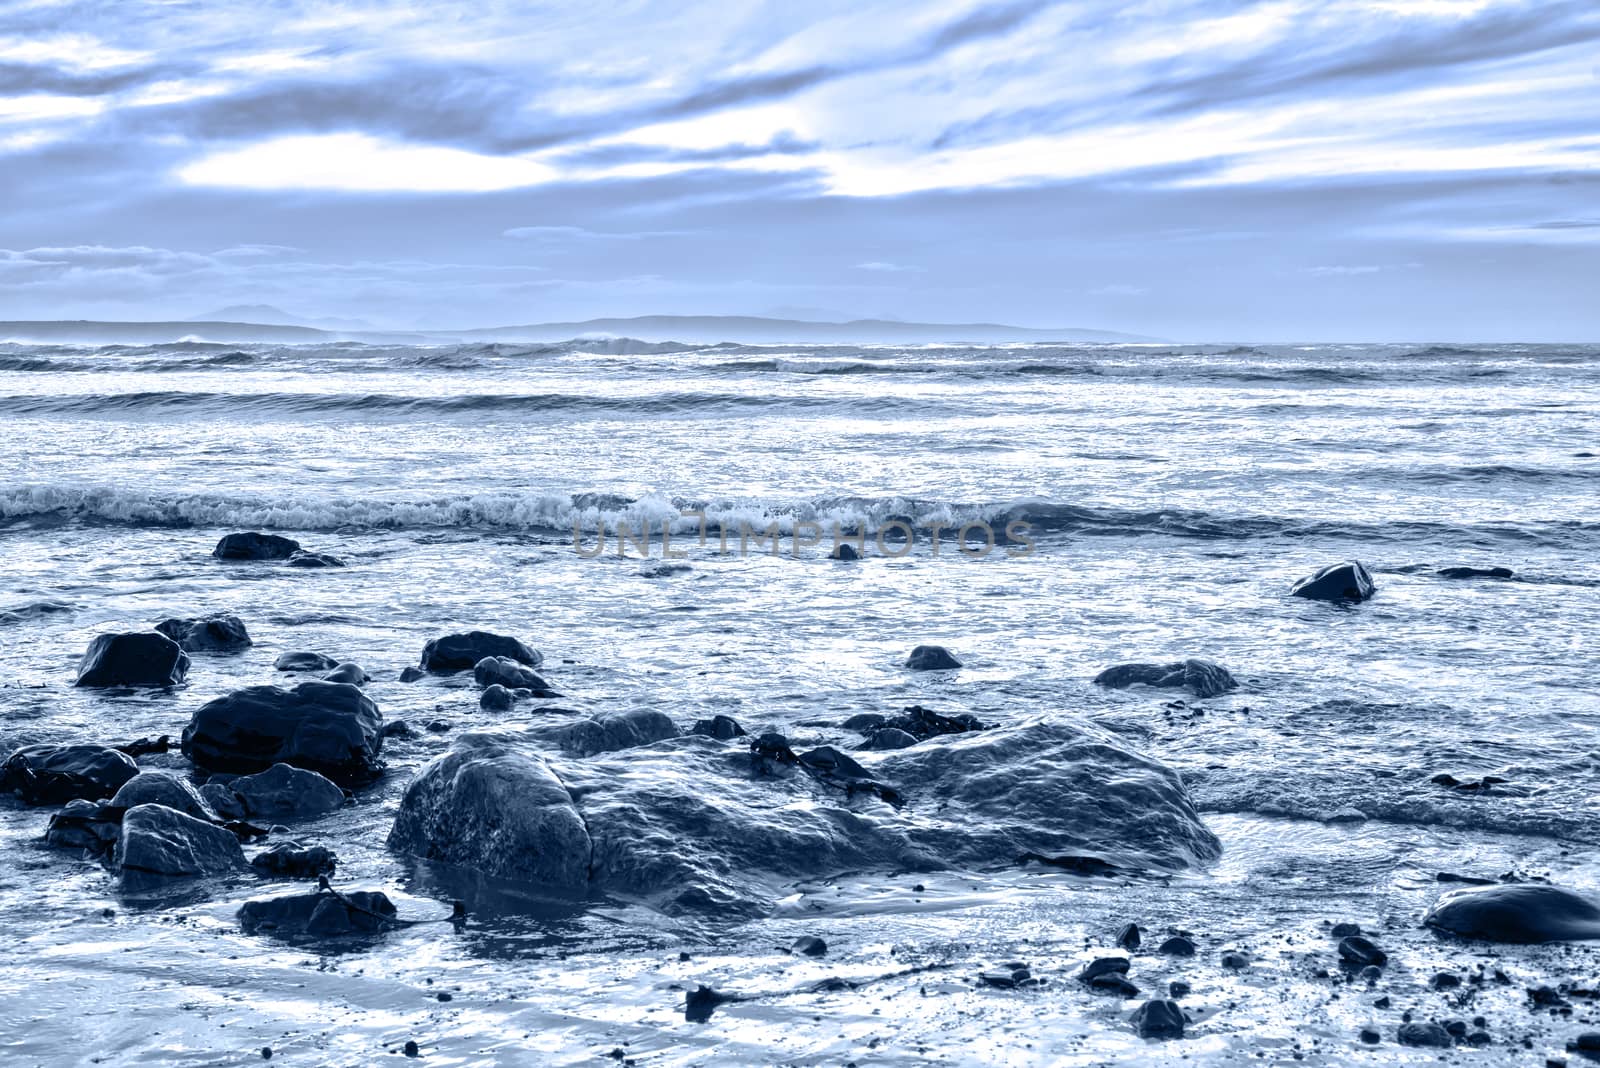 reflections at rocky beal beach near ballybunion on the wild atlantic way ireland with a beautiful blue tone